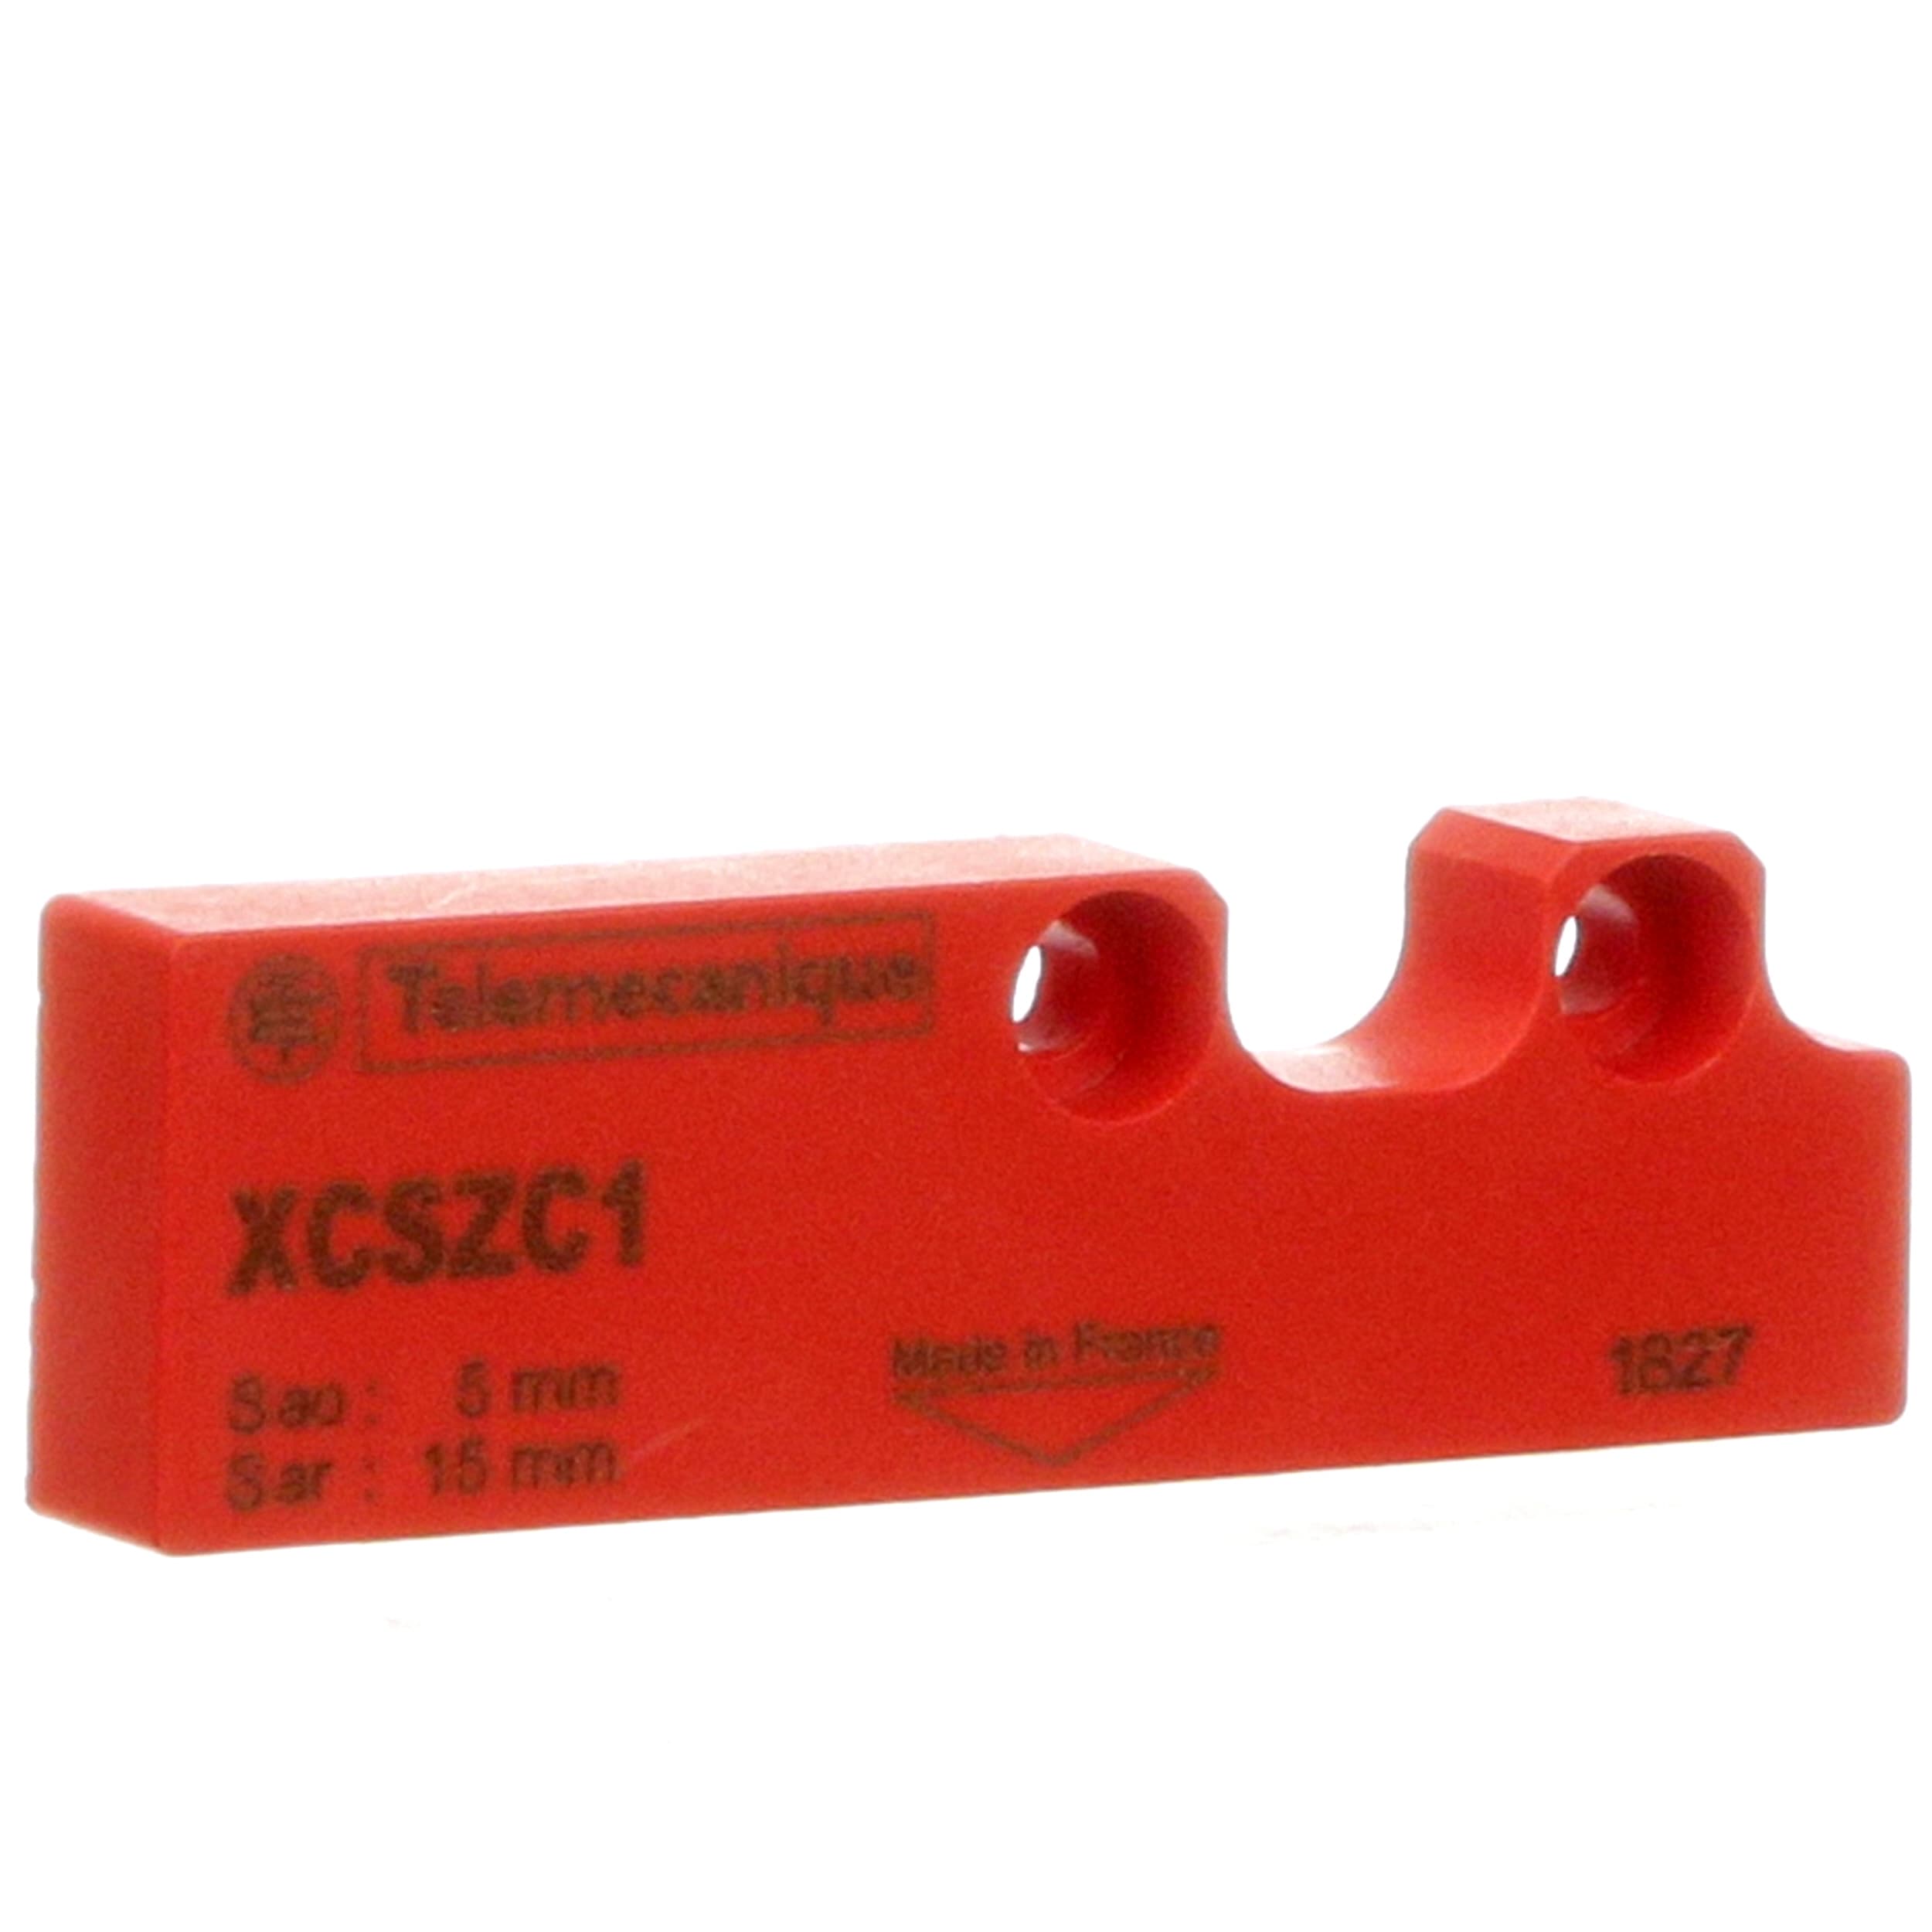 Telemecanique XCSZC1 Coded Magnet for XCSDMC Safety Interlock Limit Switches Schneider Electric 